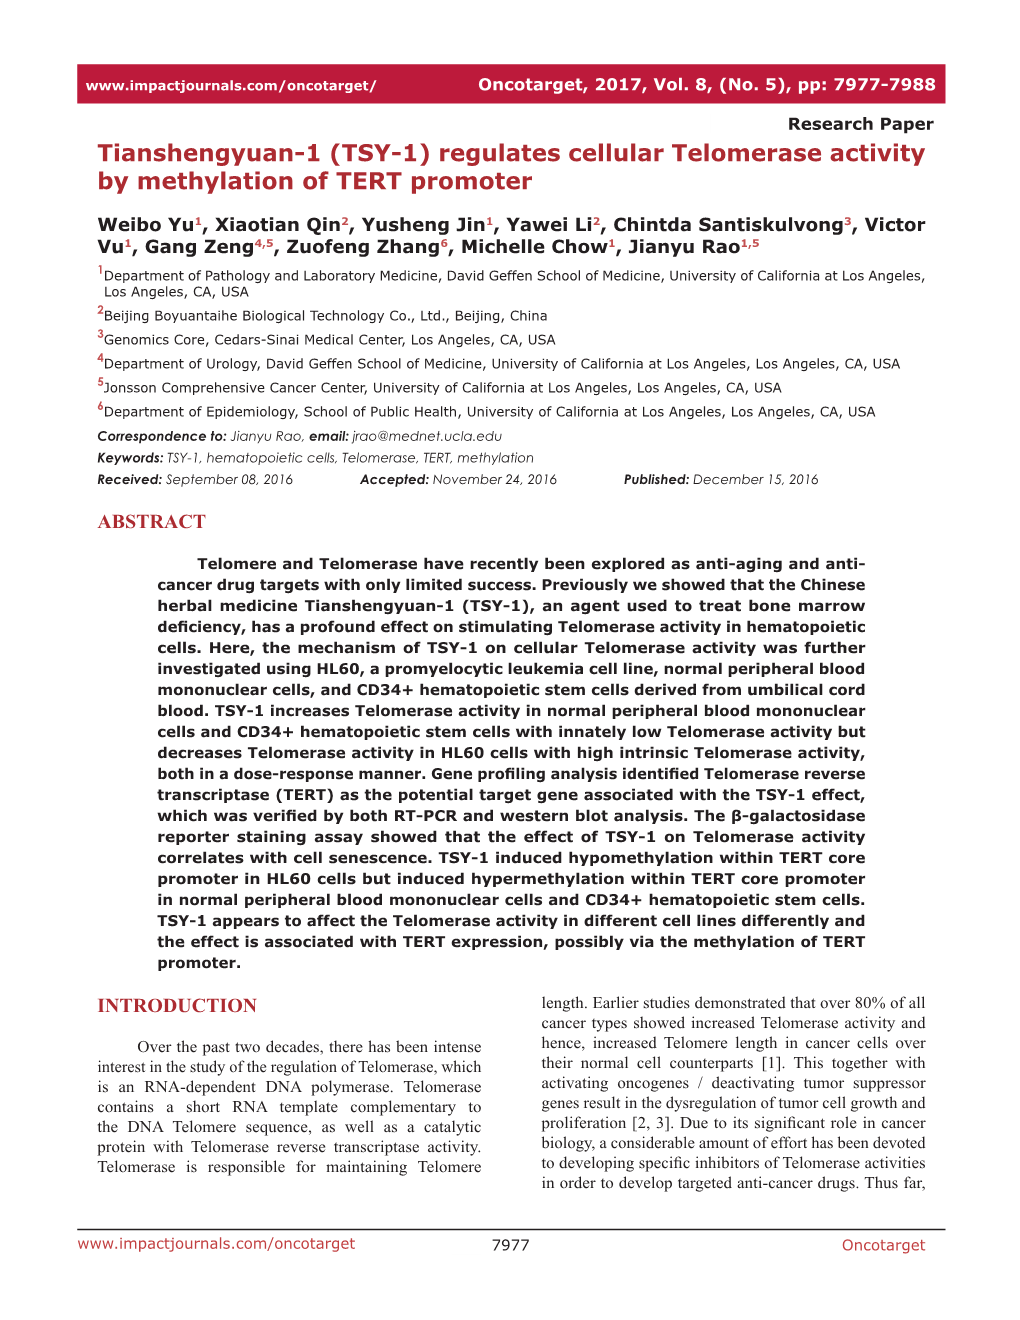 Regulates Cellular Telomerase Activity by Methylation of TERT Promoter